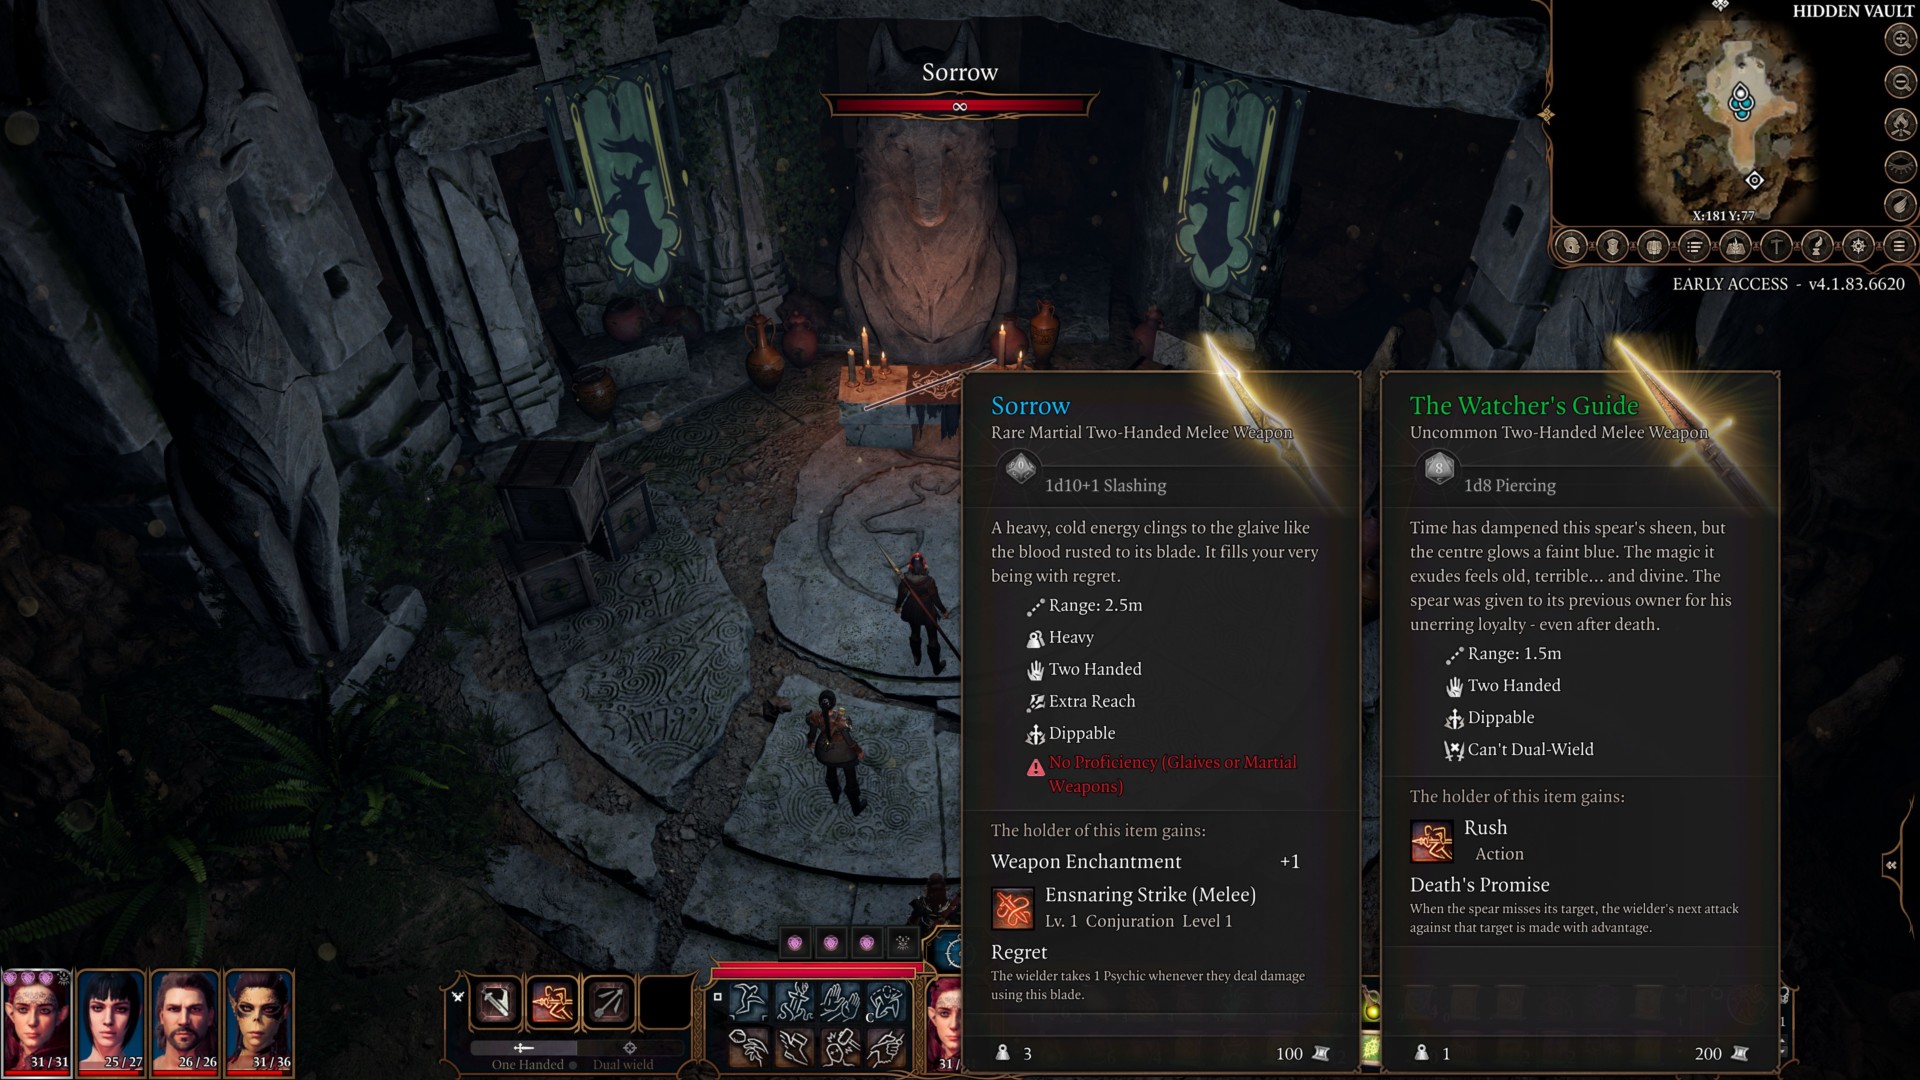 Rescuing the Druid Halsin - Baldur's Gate III Guide - IGN